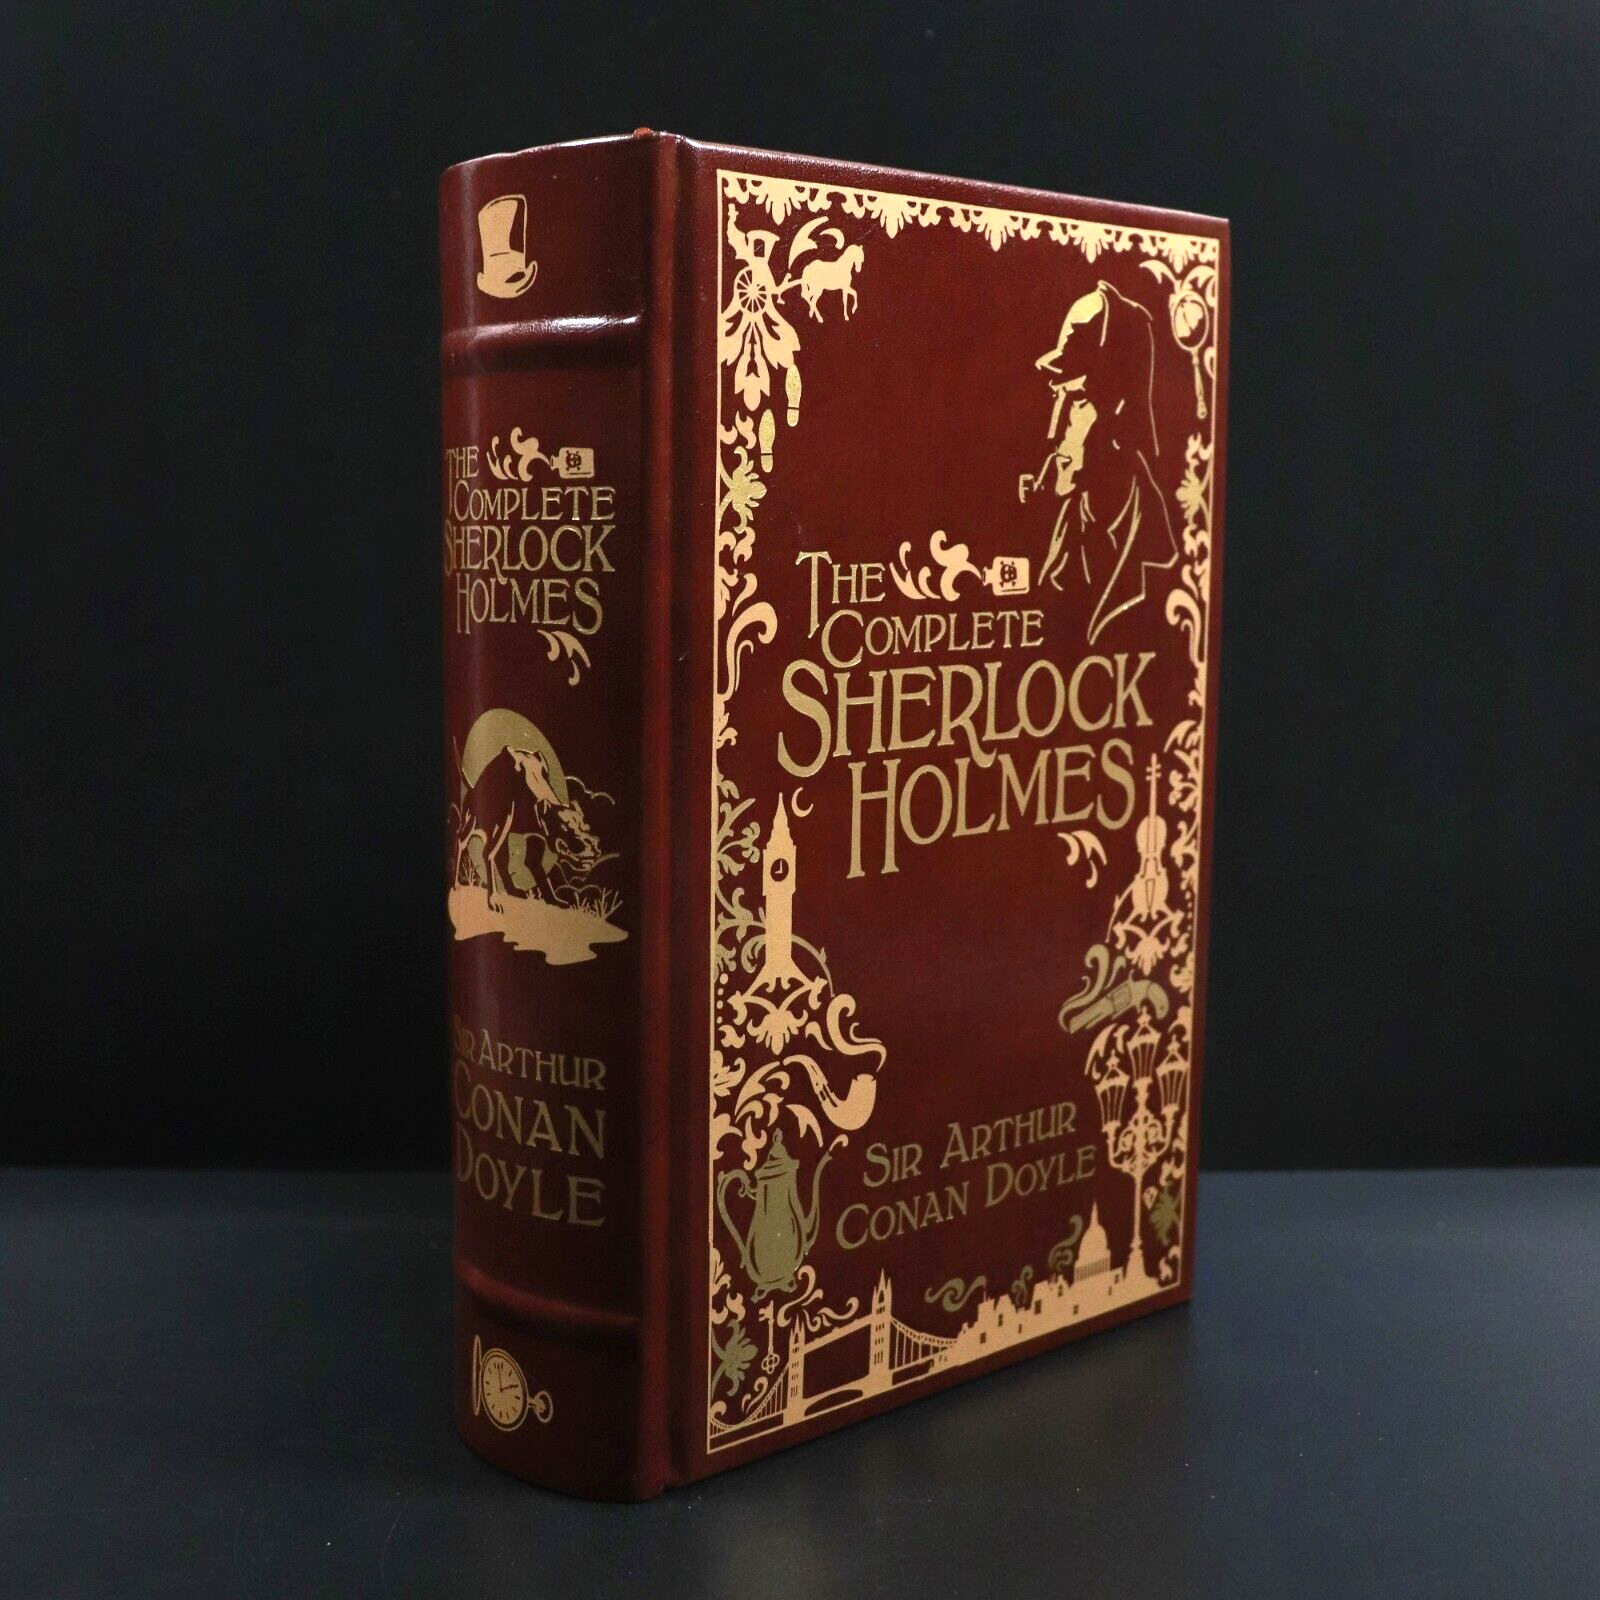 2009 The Complete Sherlock Holmes by Sir Arthur Conan Doyle Crime Fiction Book